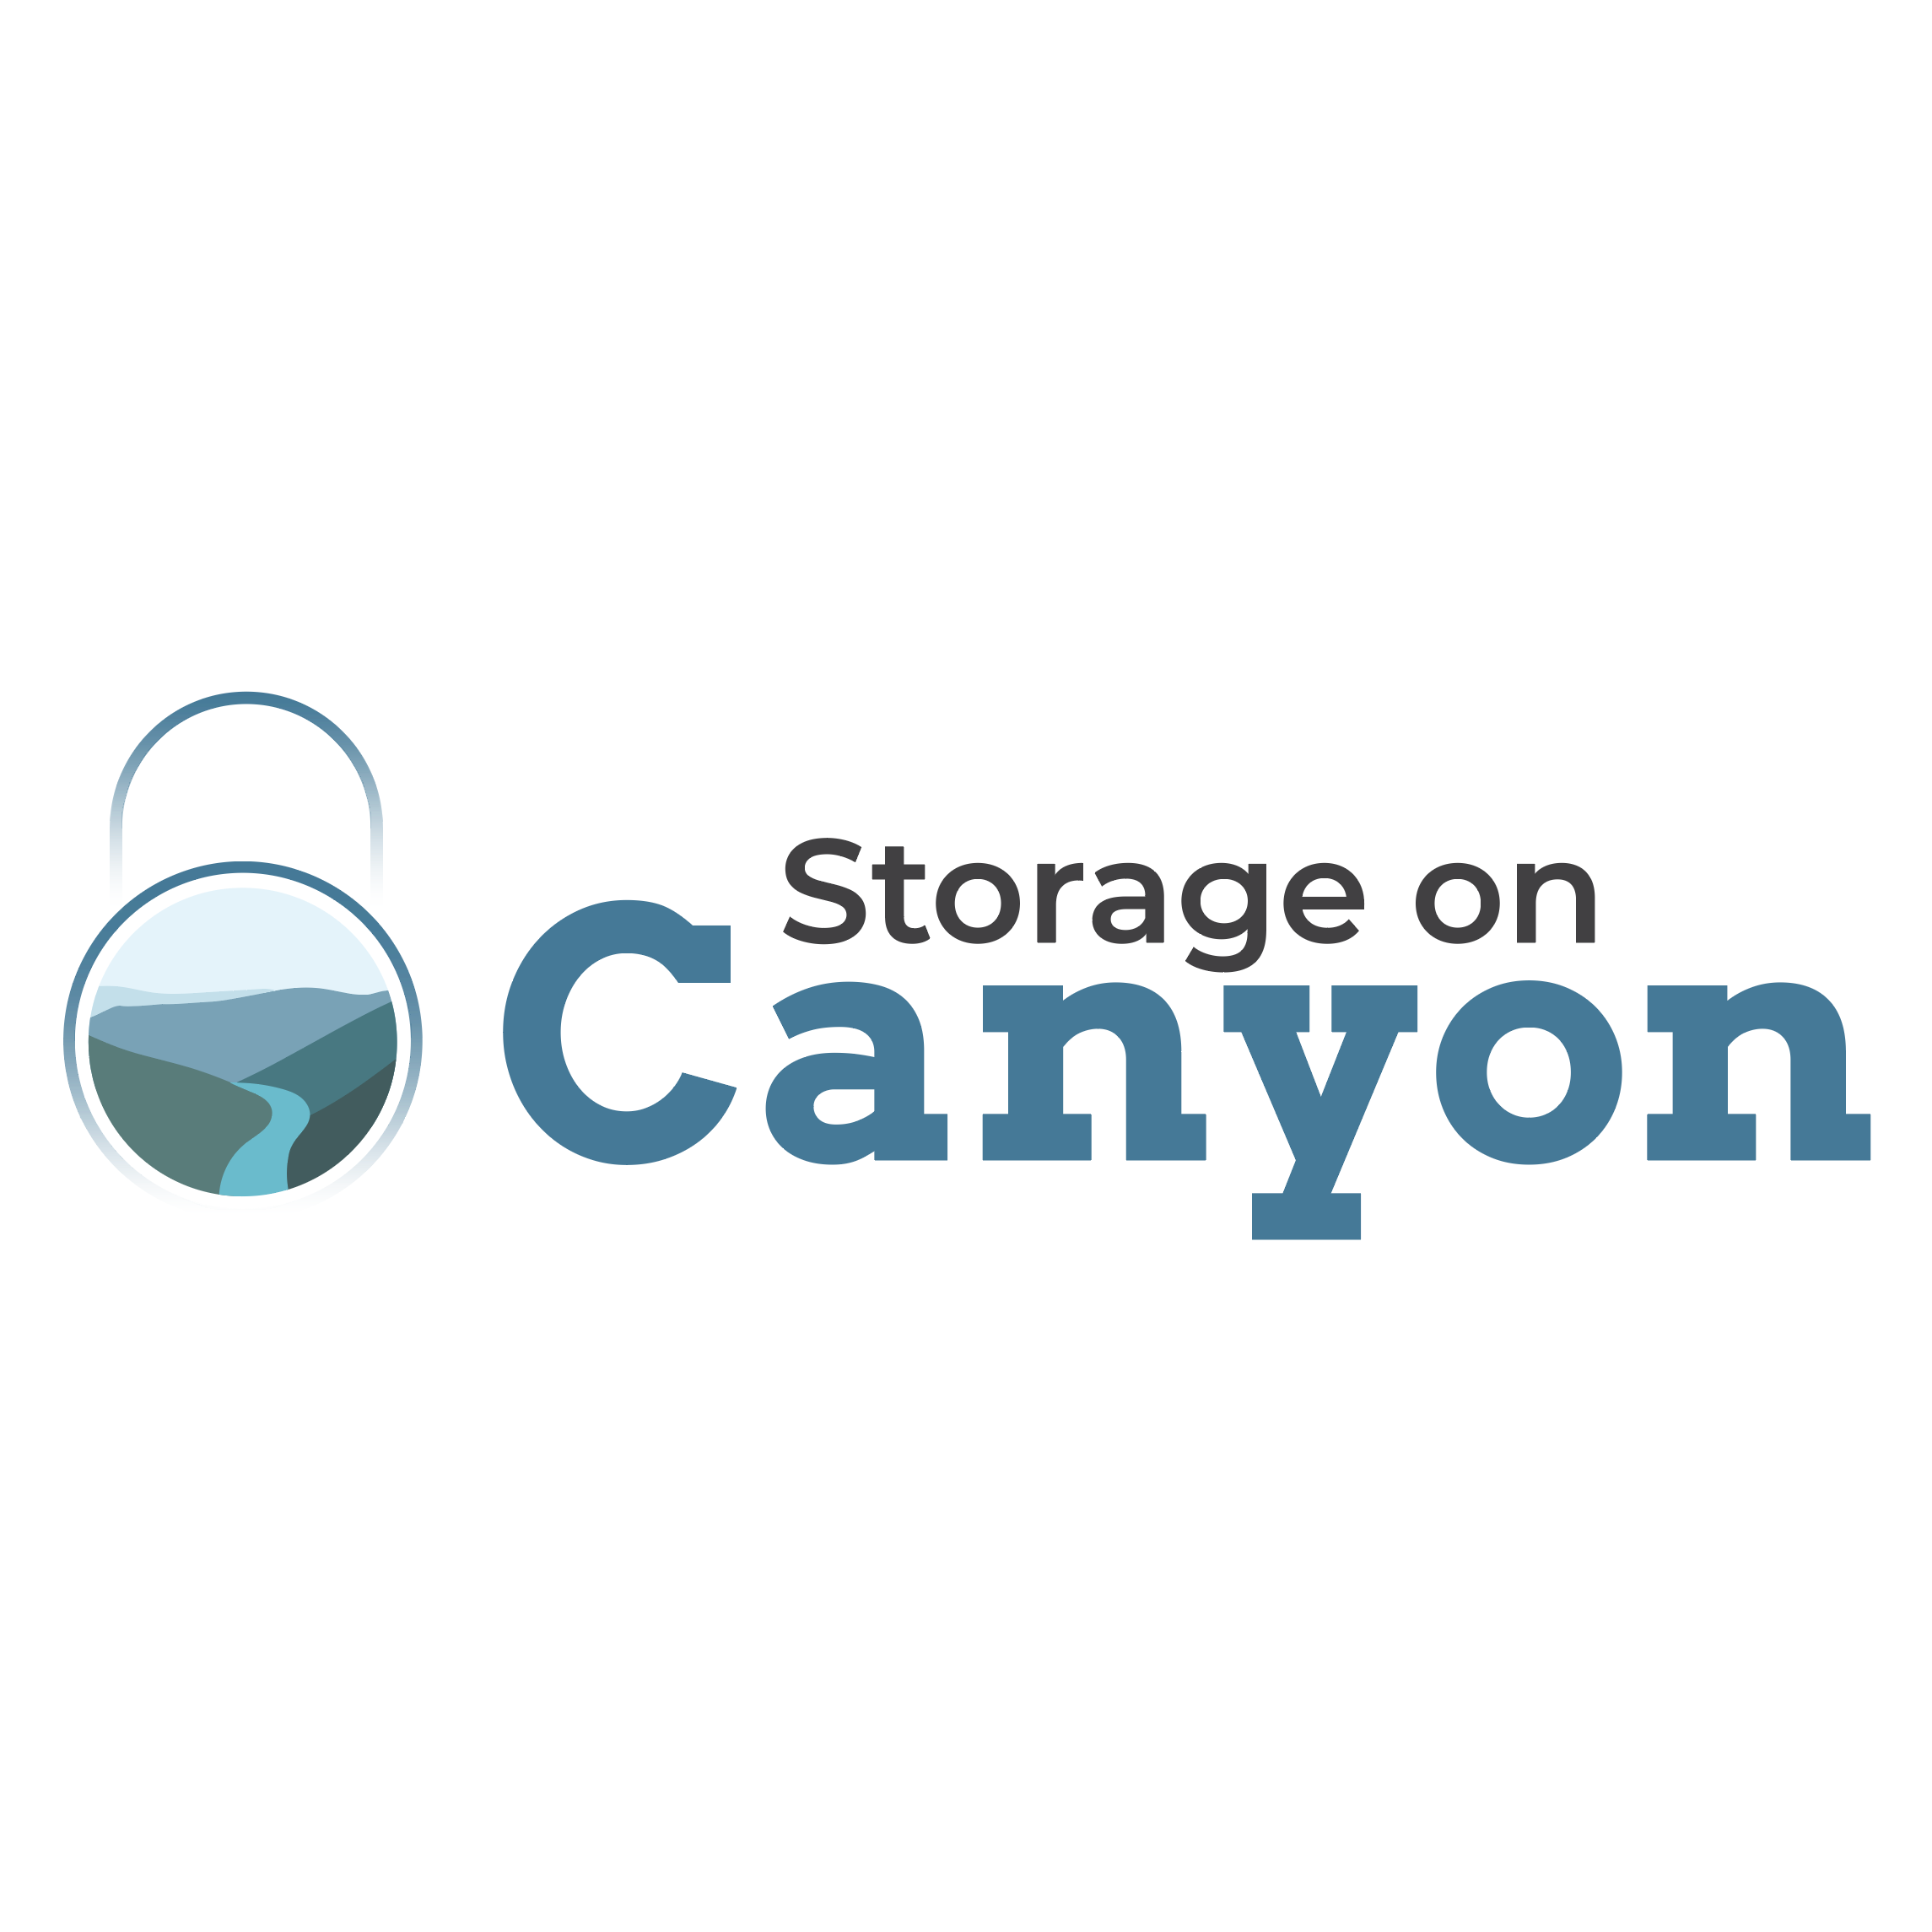 Storage On Canyon